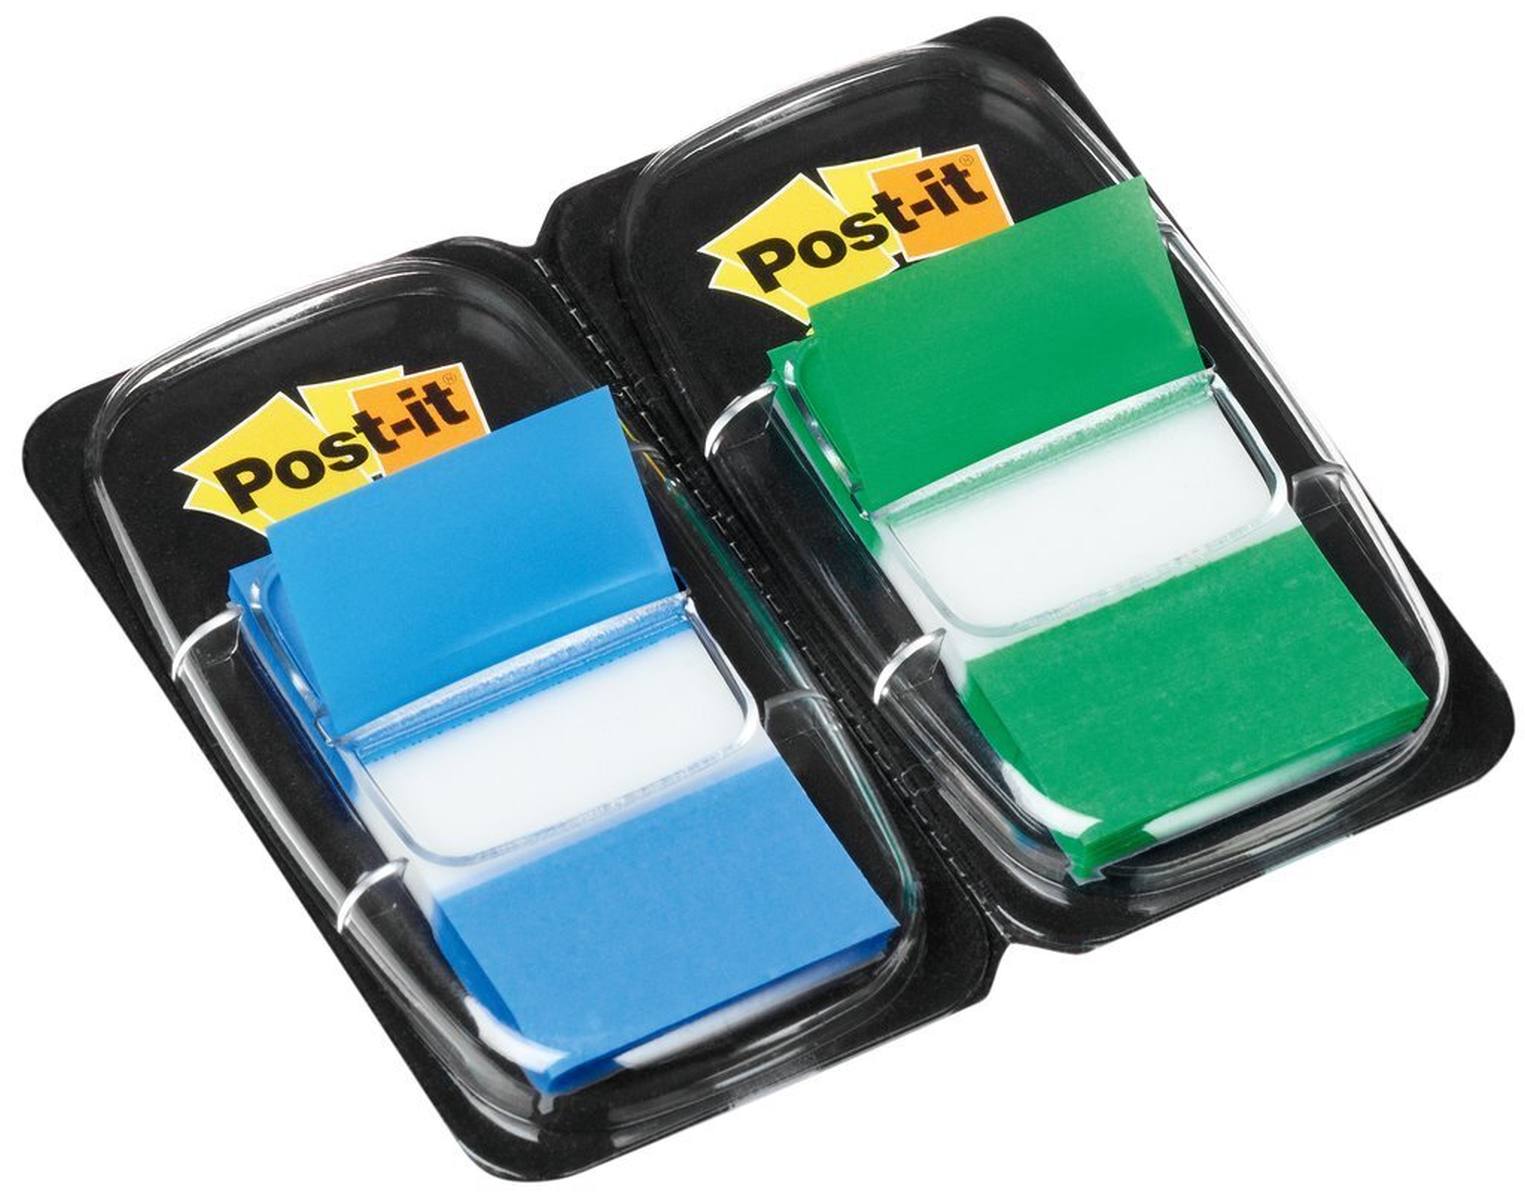 3M Post-it Index I680-GB2, 25.4 mm x 43.2 mm, blue, green, 2 x 50 adhesive strips in dispenser